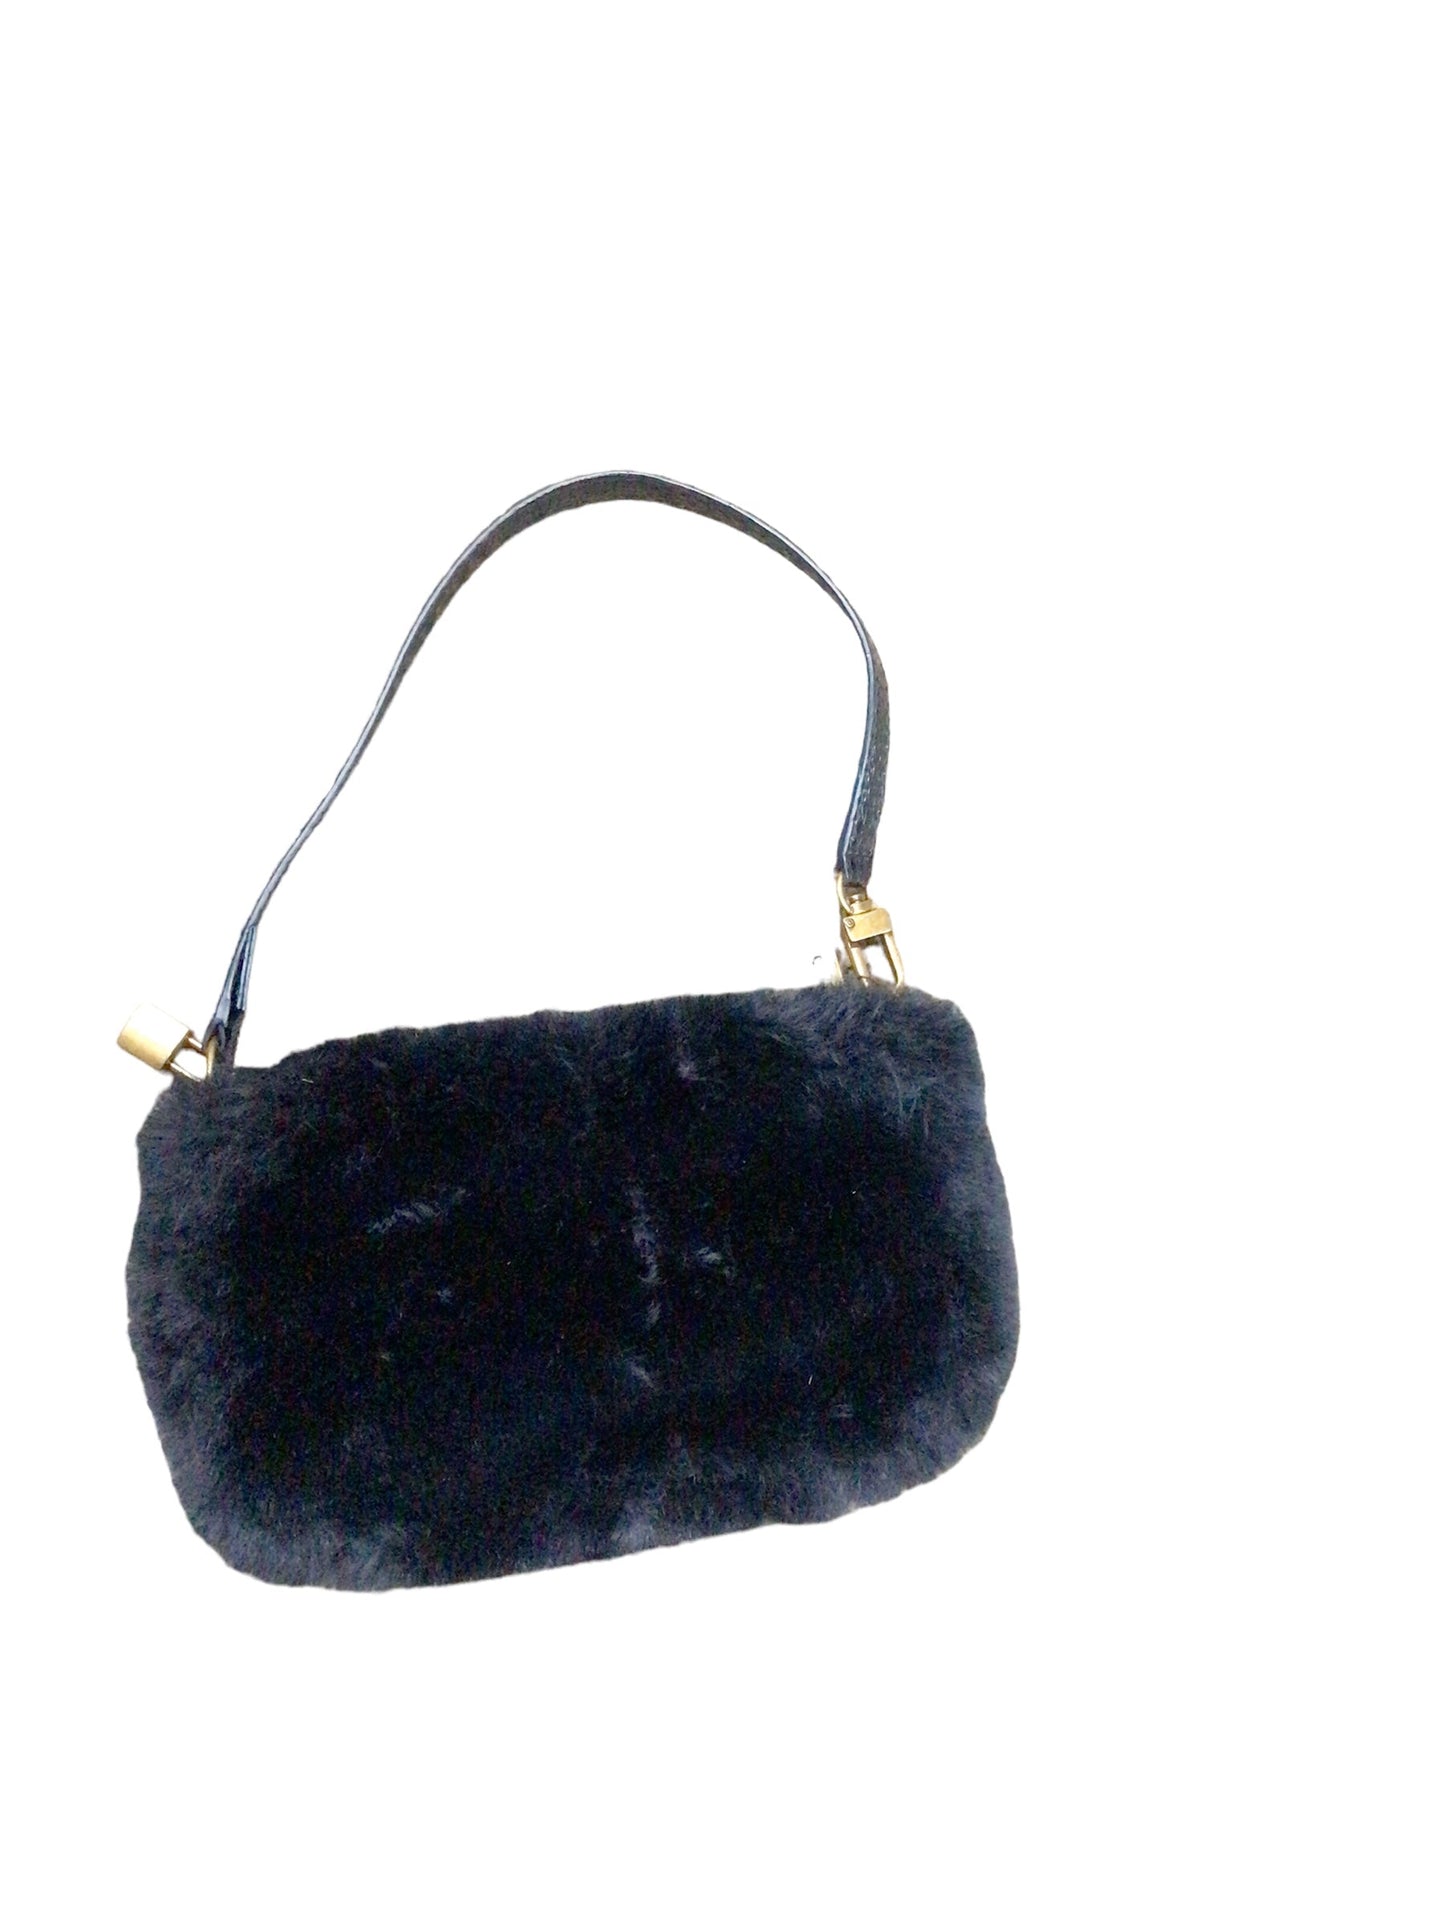 Handbag By Guess  Size: Small